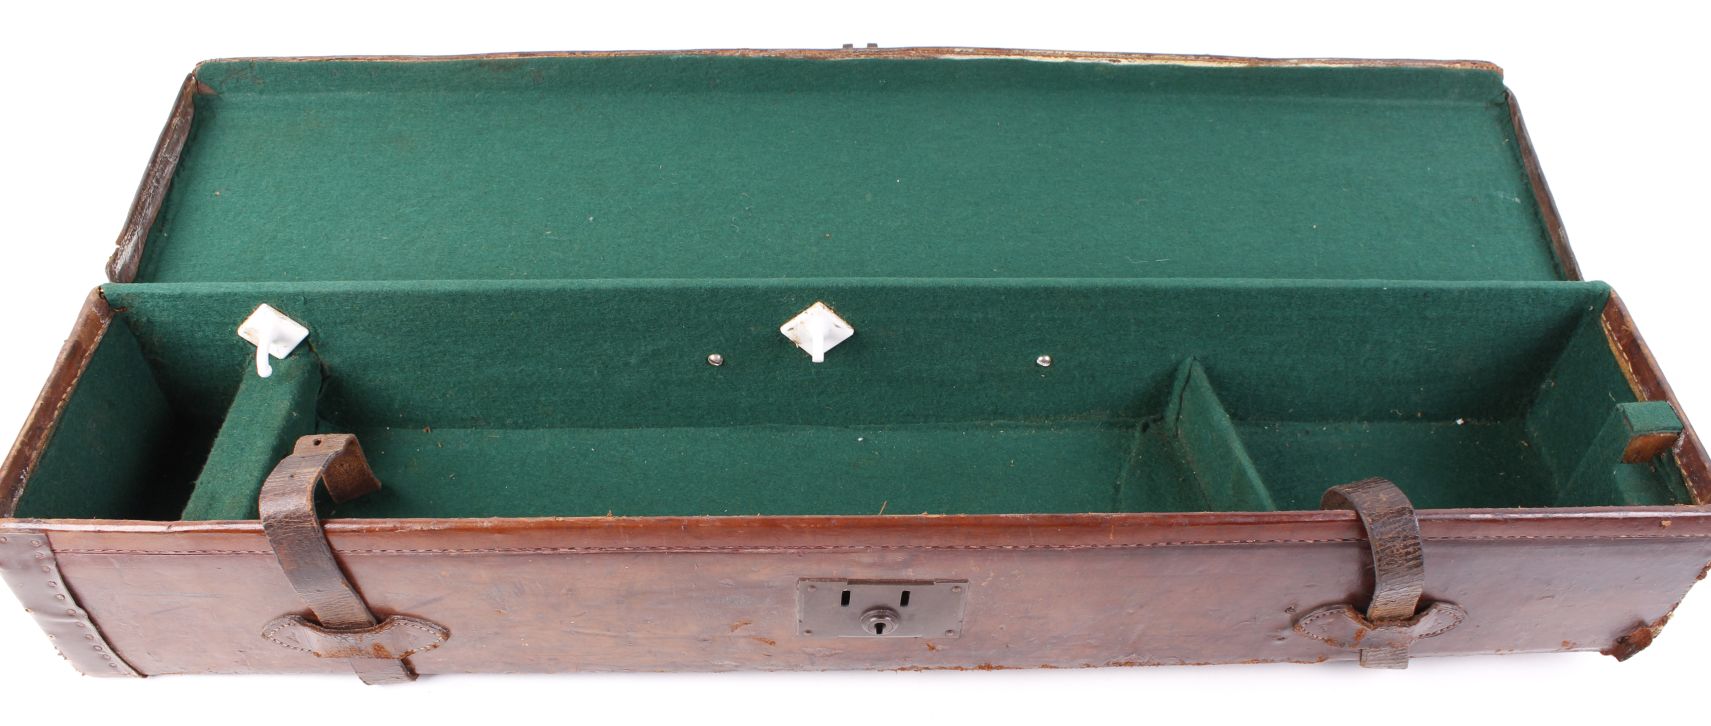 Vintage leather gun case for restoration, green baize lined interior, internal measures l. - Image 2 of 2